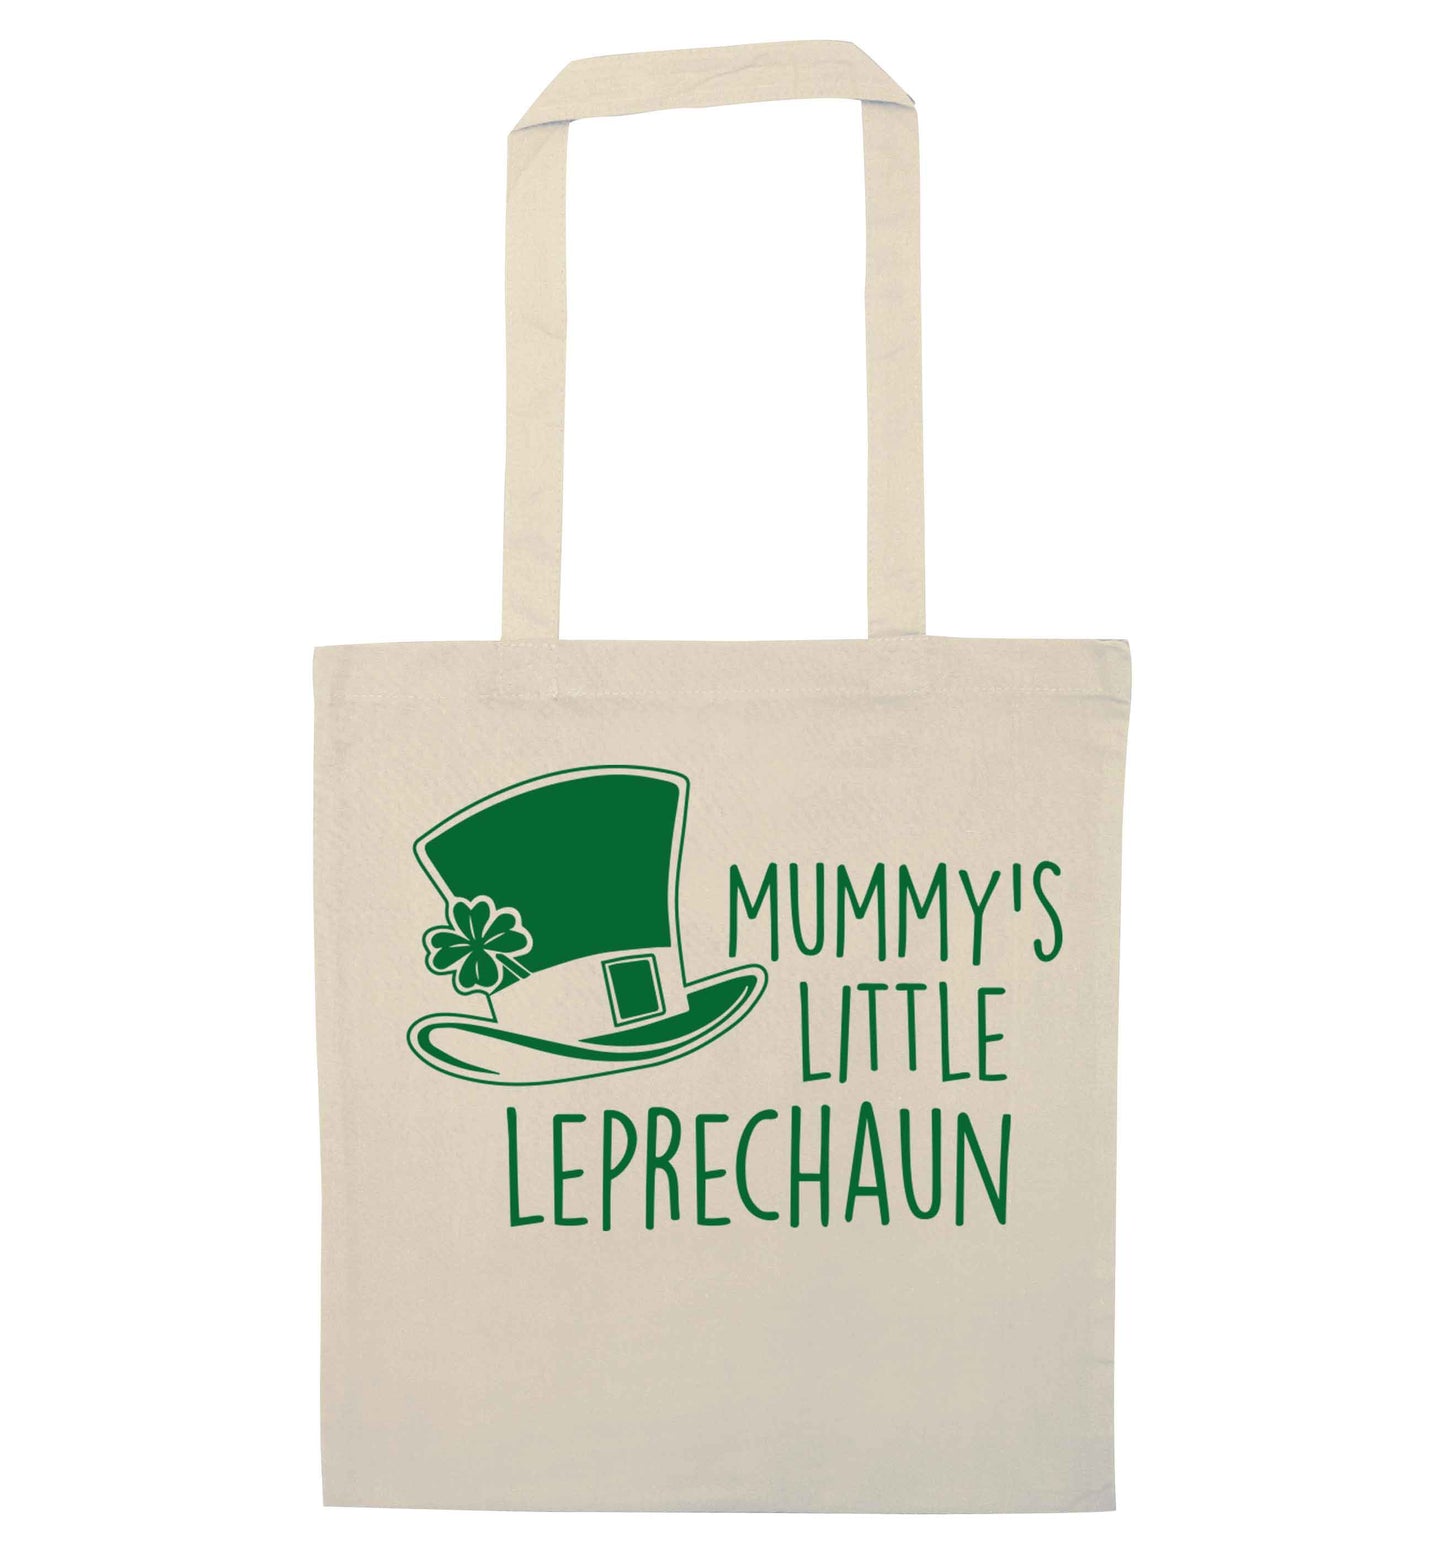 Mummy's little leprechaun natural tote bag